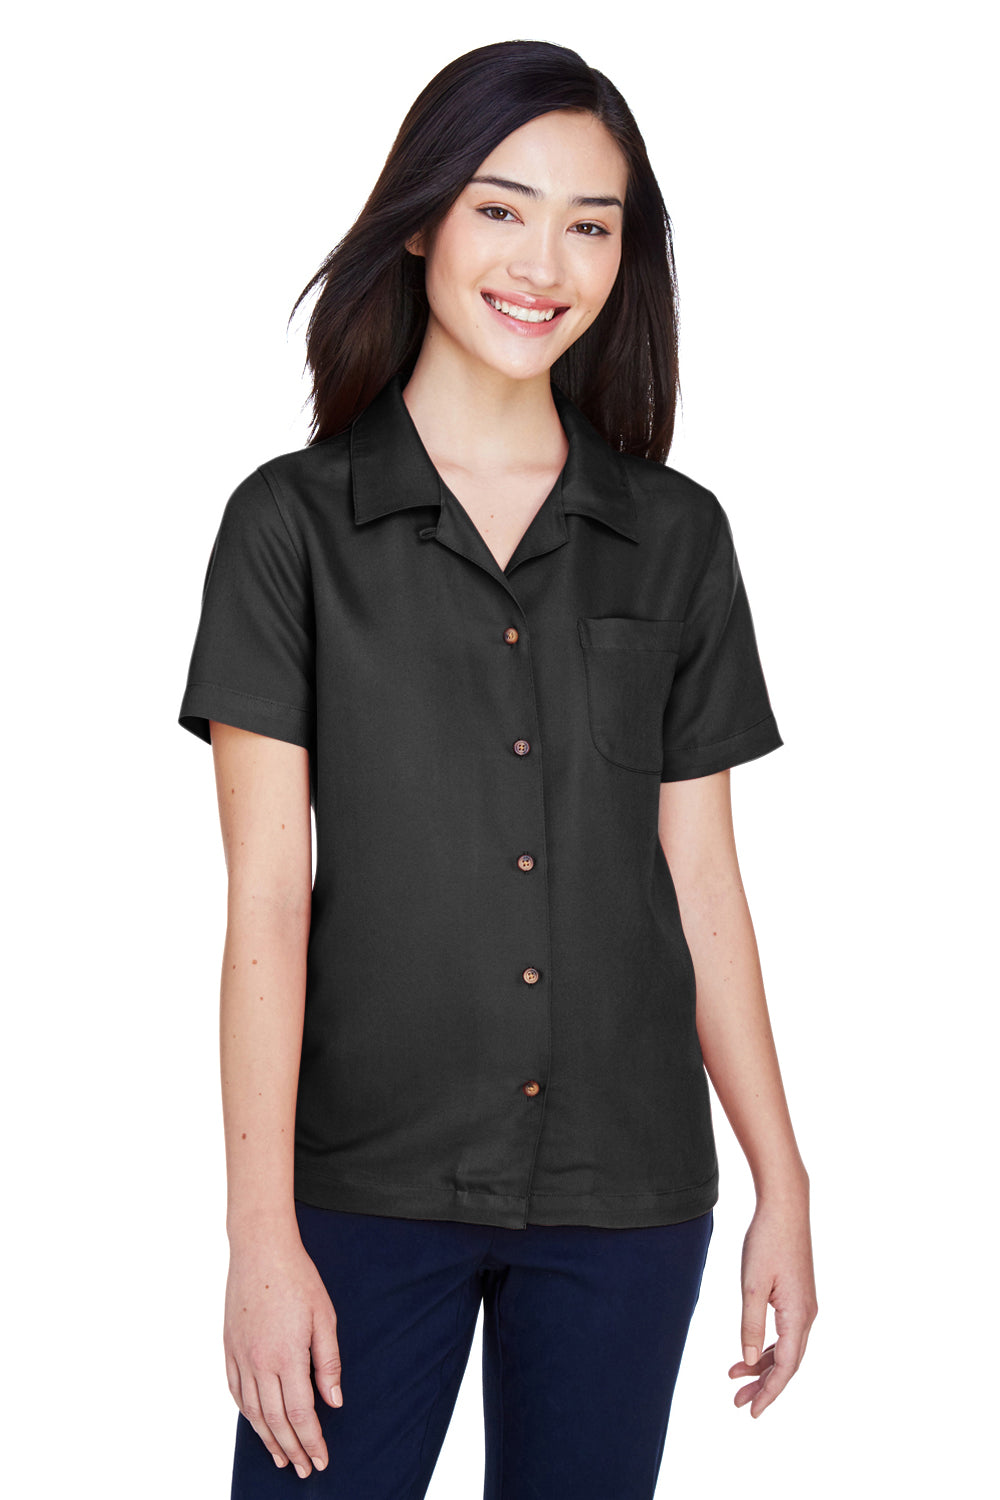 UltraClub 8981 Womens Cabana Breeze Short Sleeve Button Down Camp Shirt w/ Pocket Black Front